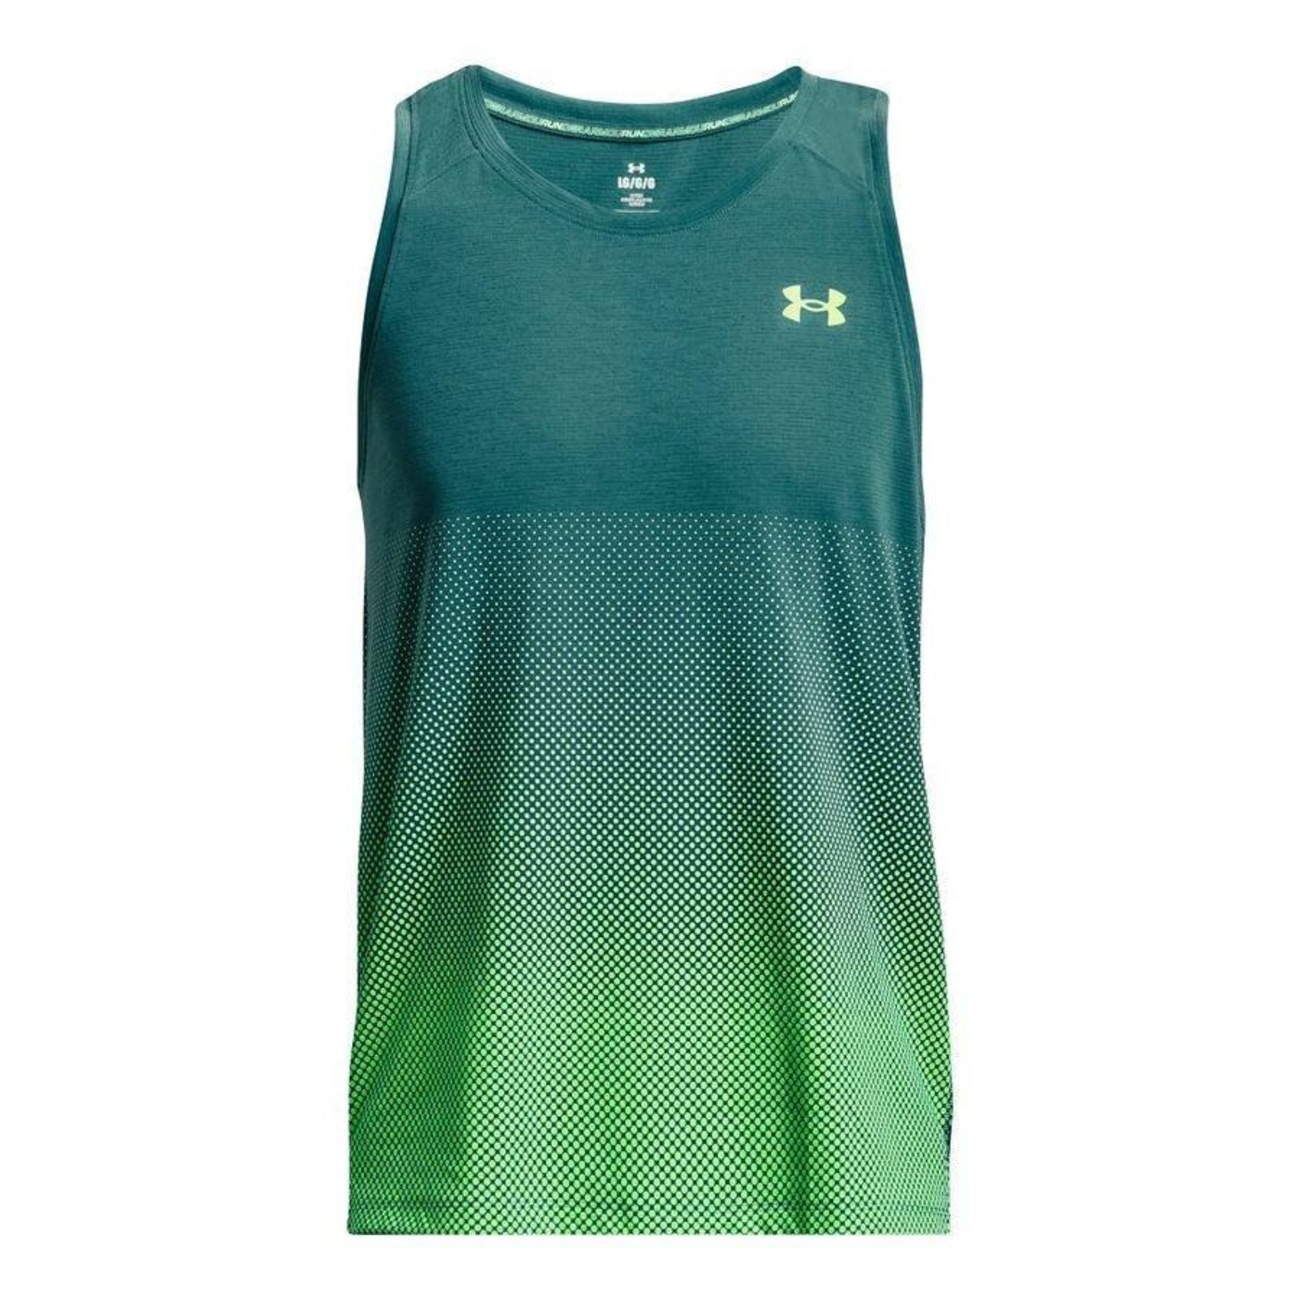 Camiseta Under Armour Seamless Radial Masculina - Verde - Bayard Esportes